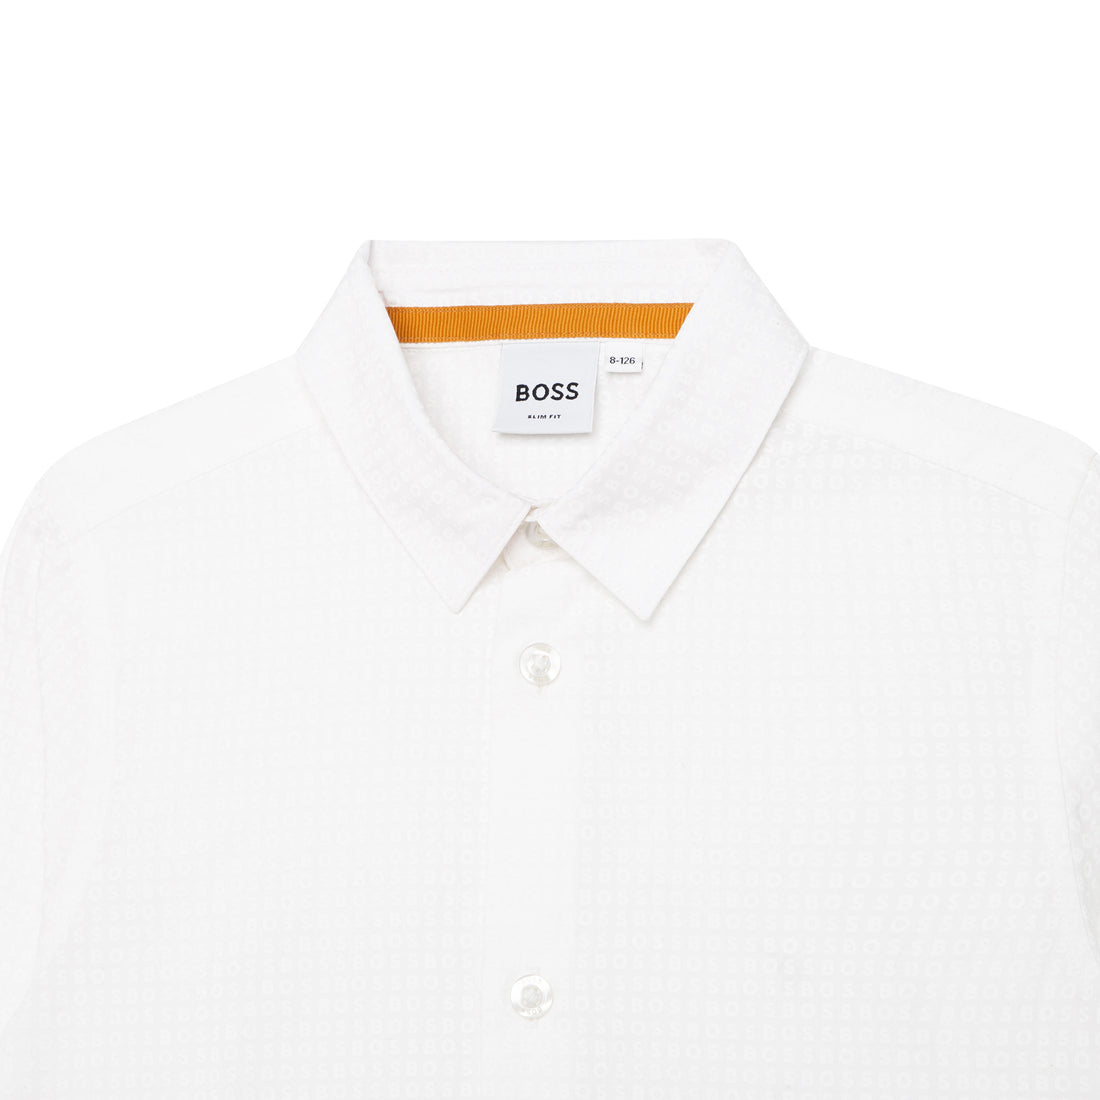 Boss Long Sleeved Shirt Style: J05962